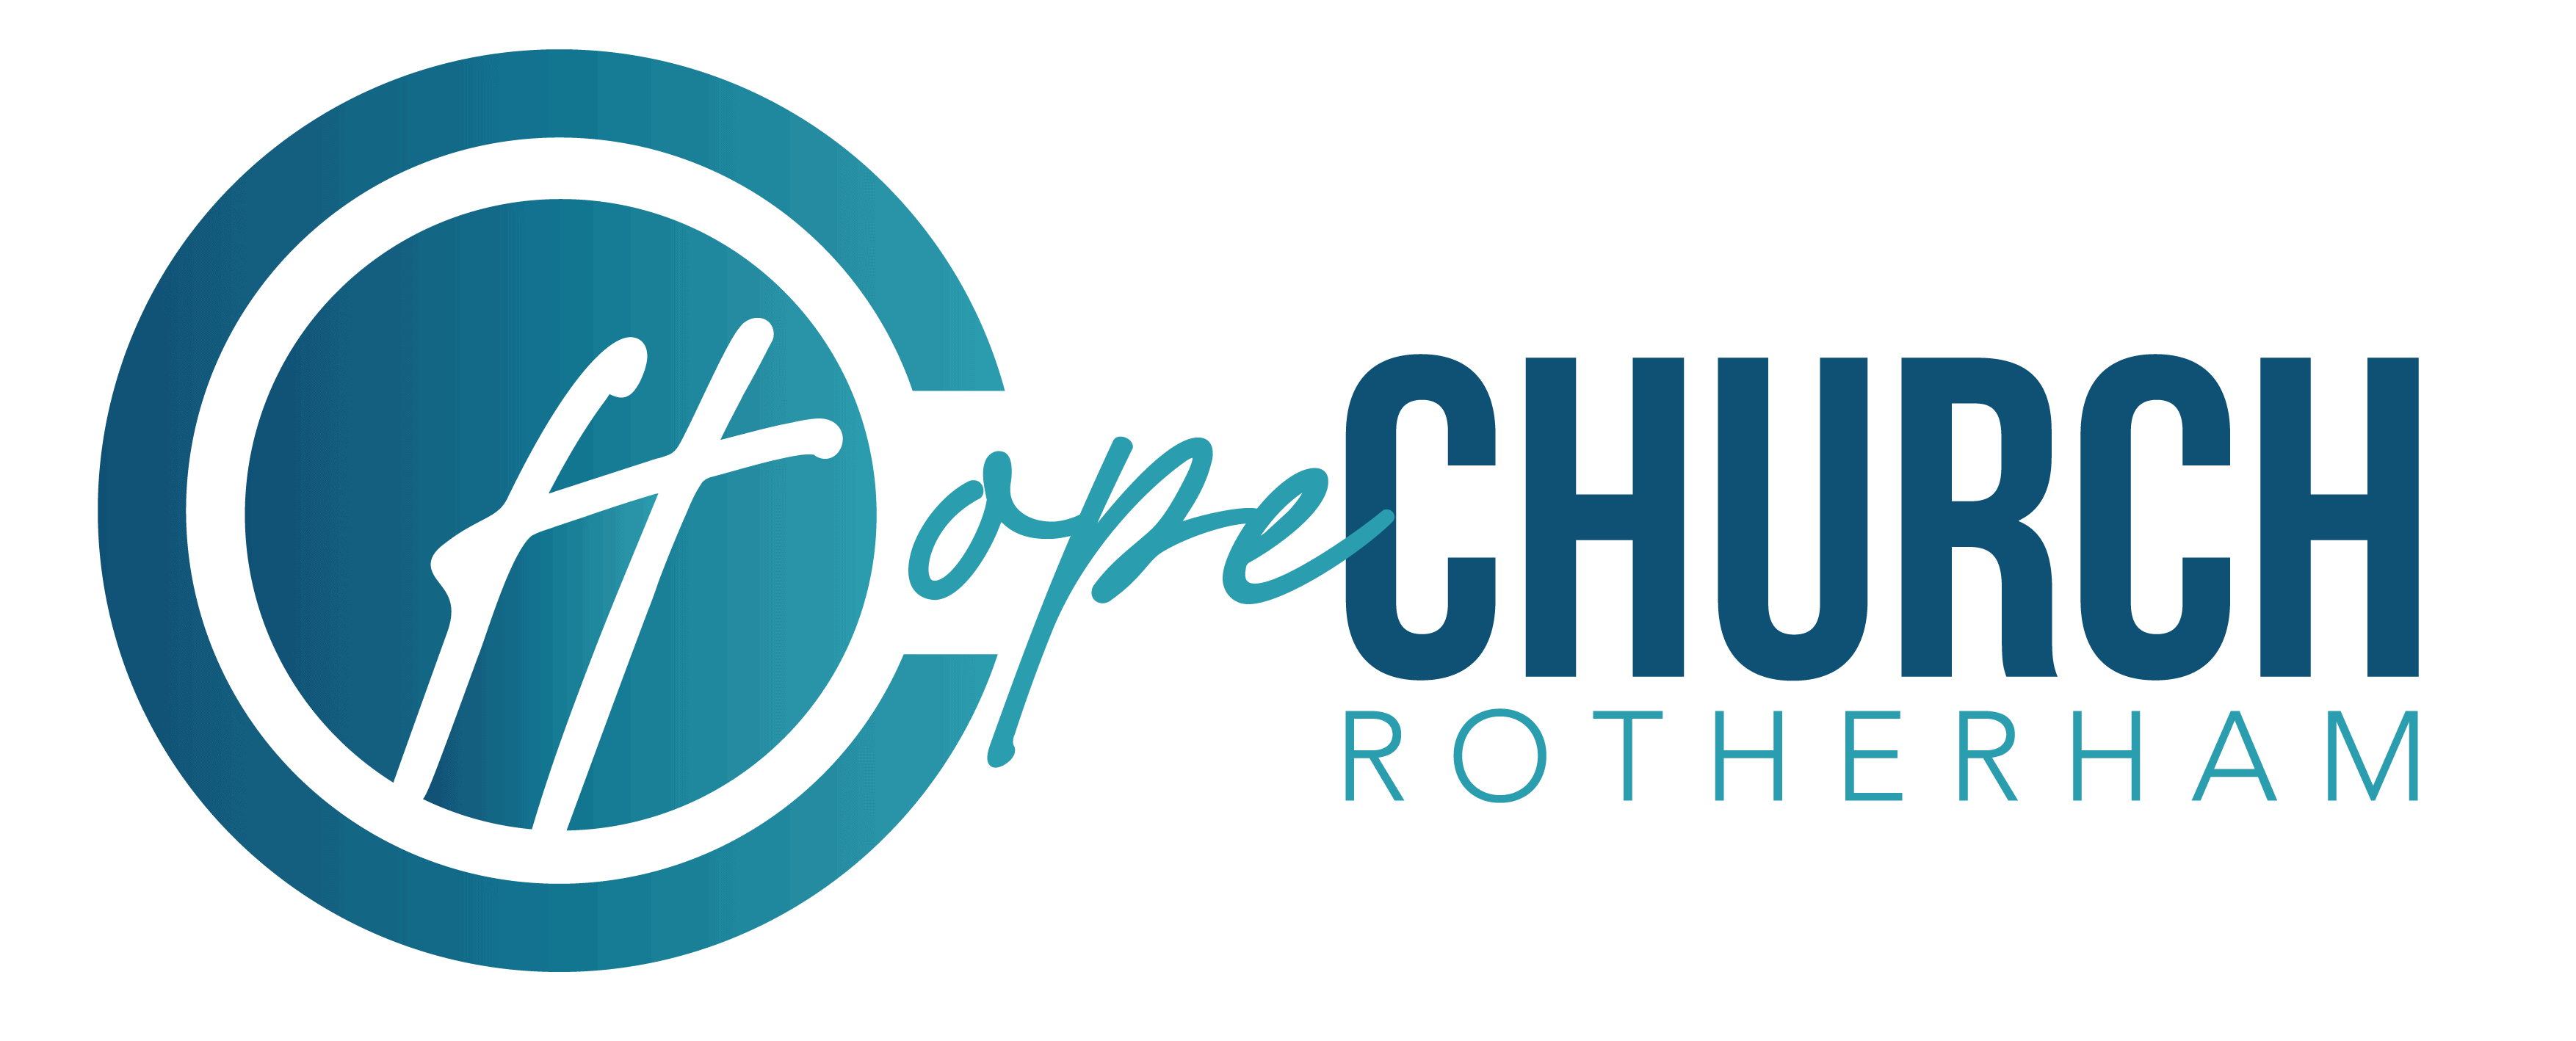 Hope Church Rotherham Main Logo wo slogan